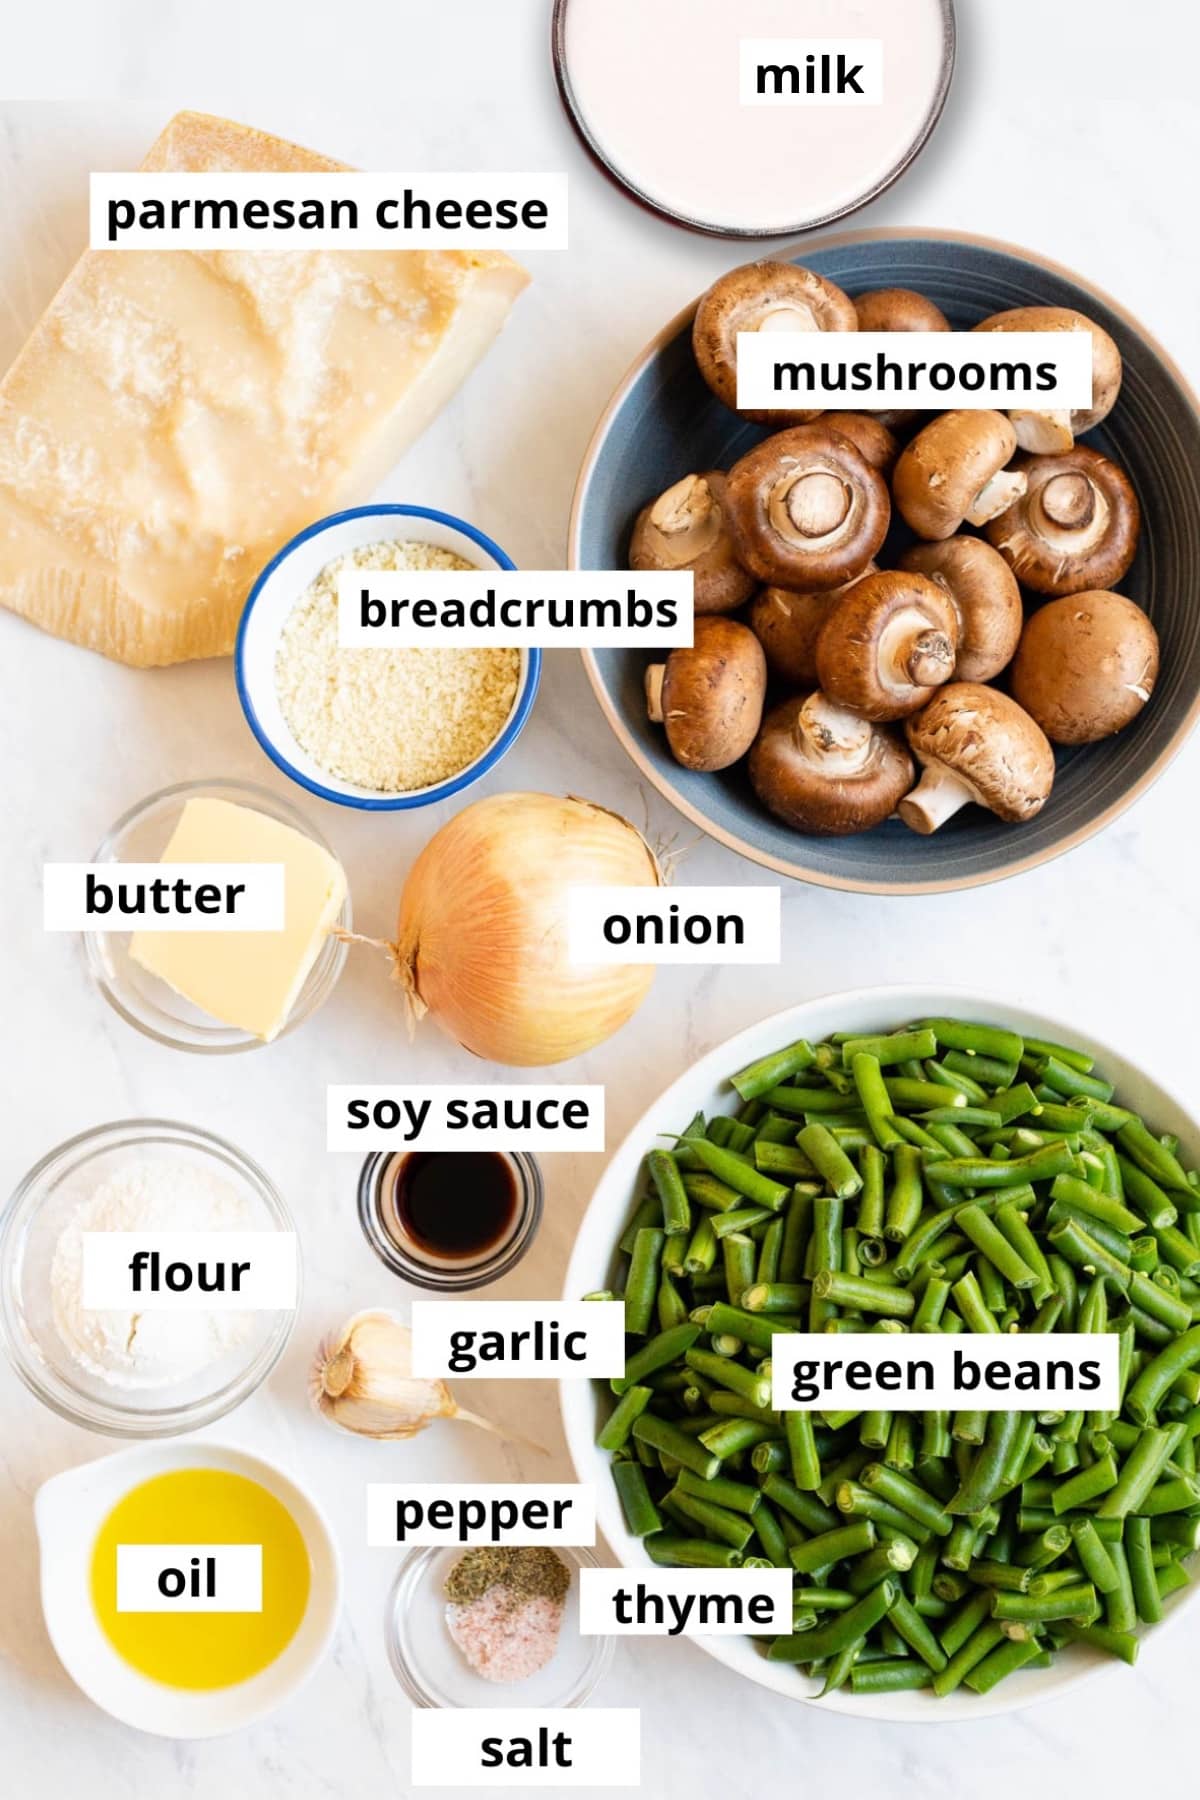 Green beans, mushrooms, onion, garlic, parmesan cheese, milk, flour, panko breadcrumbs, oil, butter, thyme, salt, pepper, soy sauce.